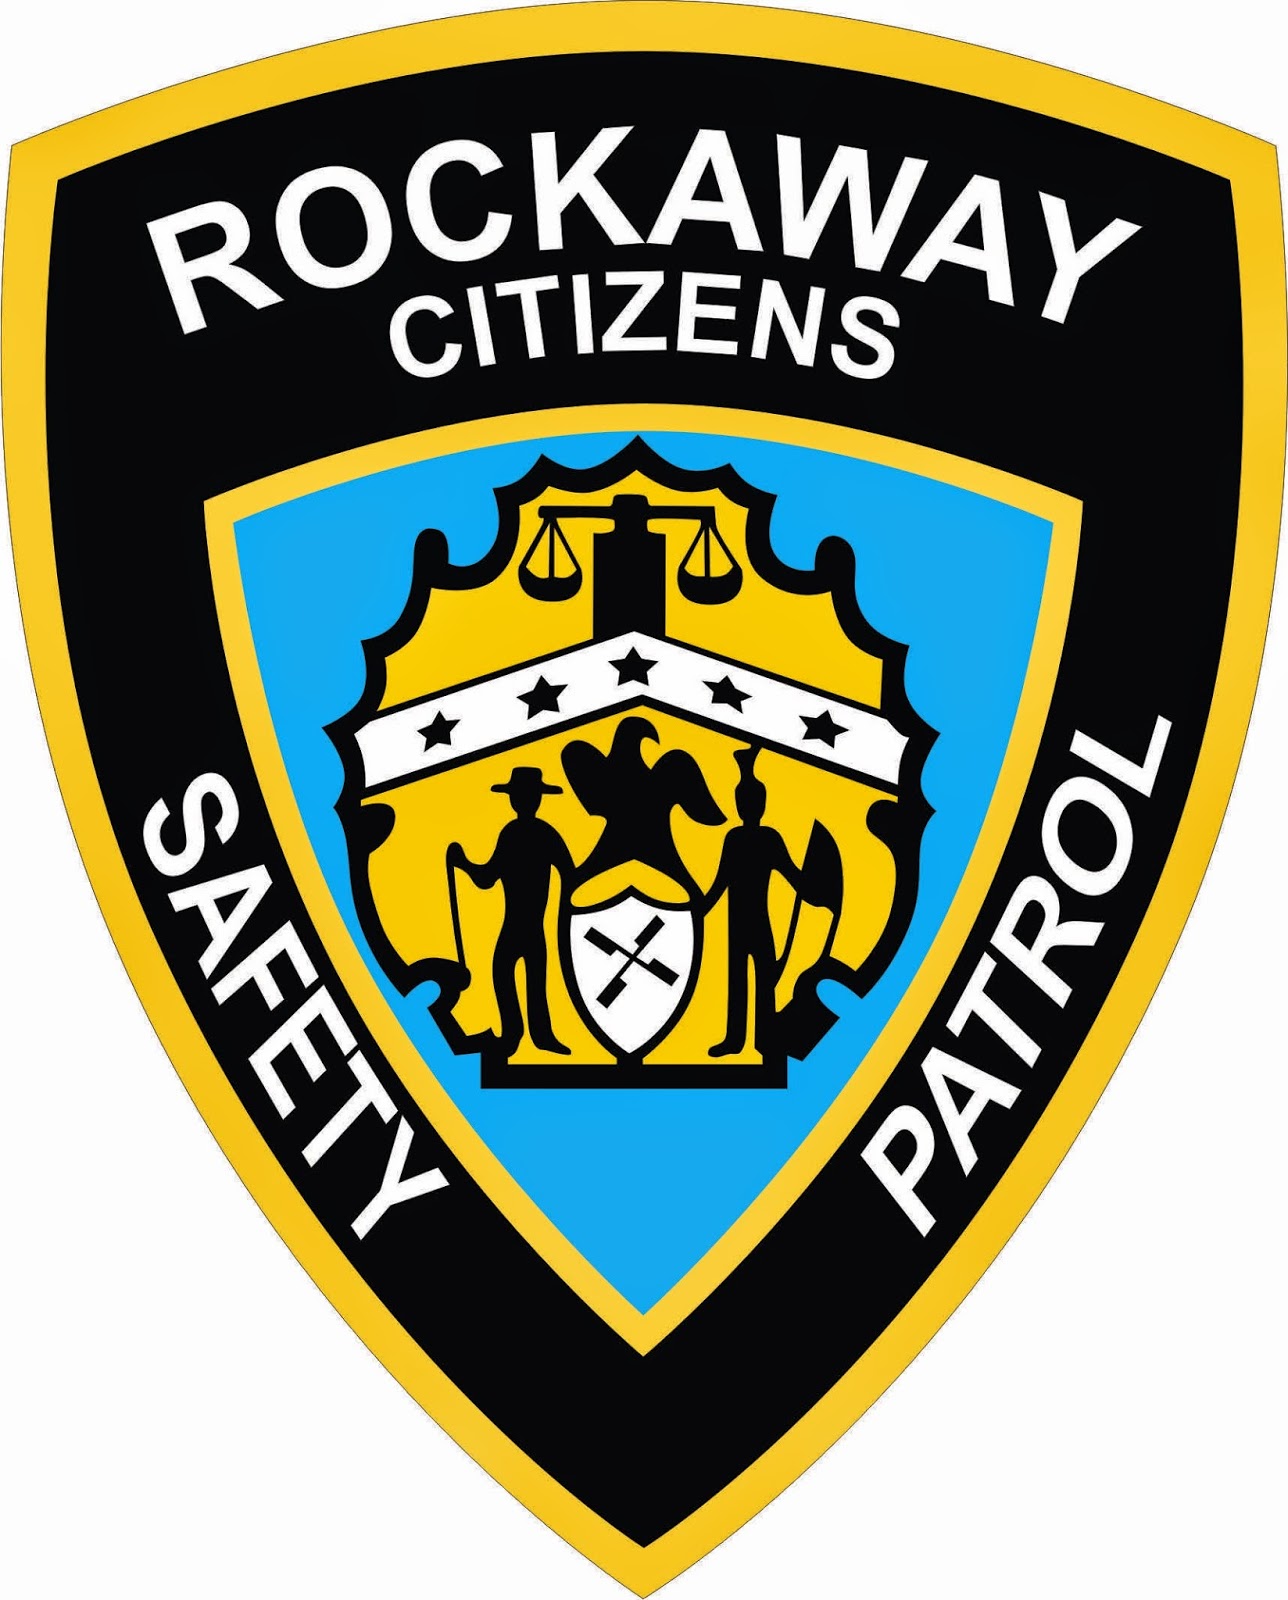 Photo of Rockaway Nassau Safety Patrol (Rockaway Shomrim) in Queens City, New York, United States - 2 Picture of Point of interest, Establishment